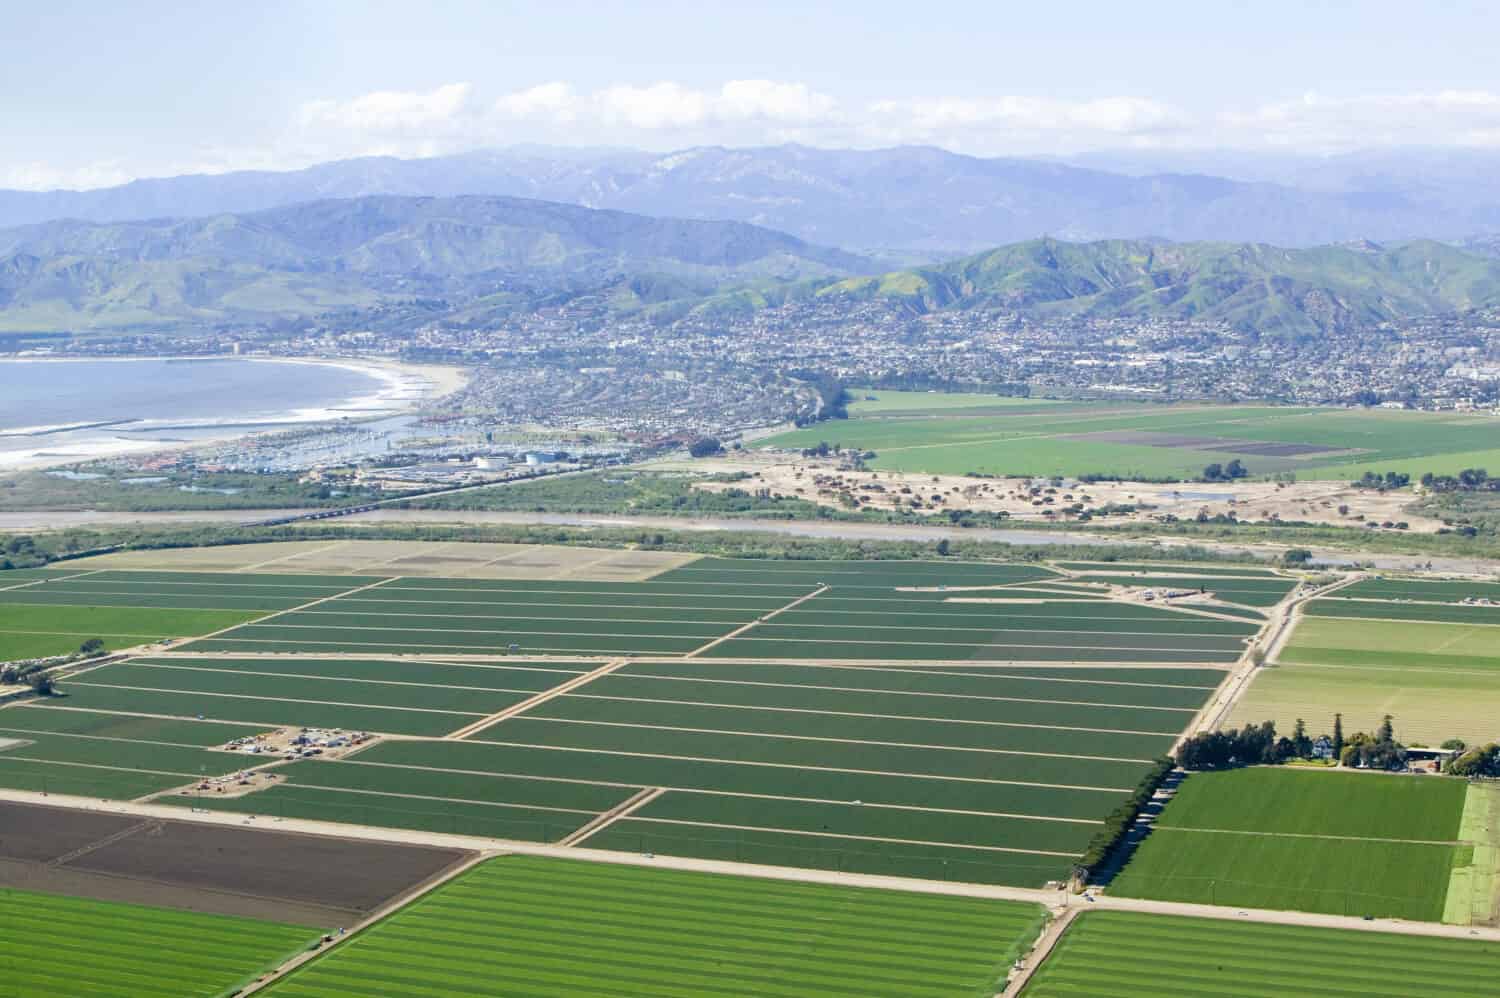 Aerial view of Oxnard farm fields in spring Ventura County, California